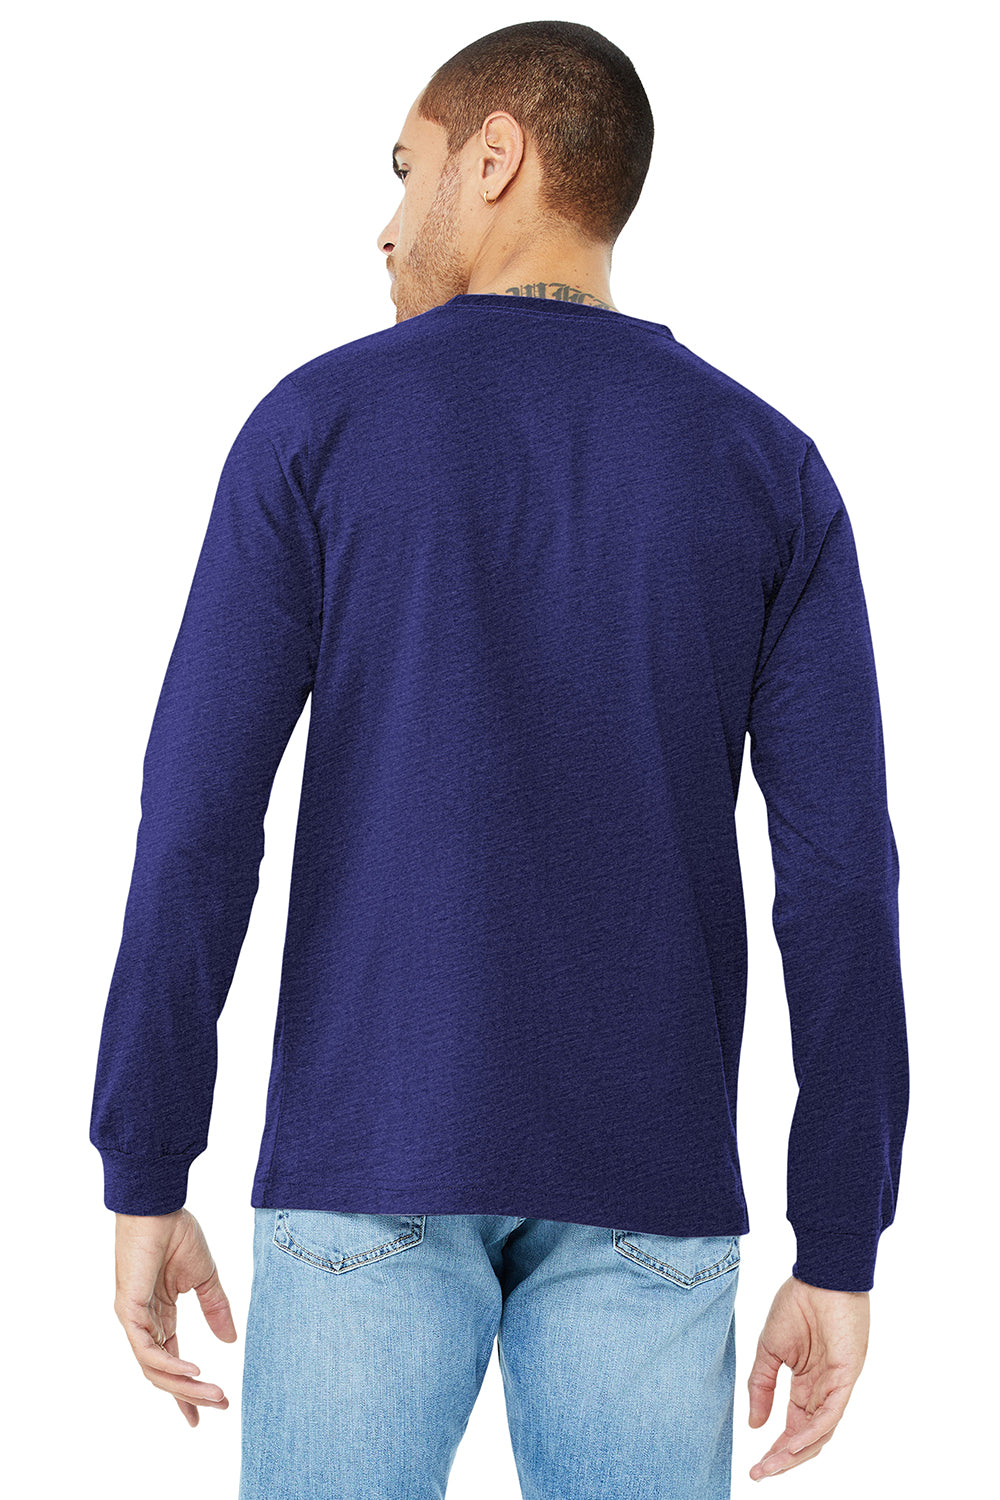 Bella + Canvas BC3501/3501 Mens Jersey Long Sleeve Crewneck T-Shirt Navy Blue Triblend Model Back